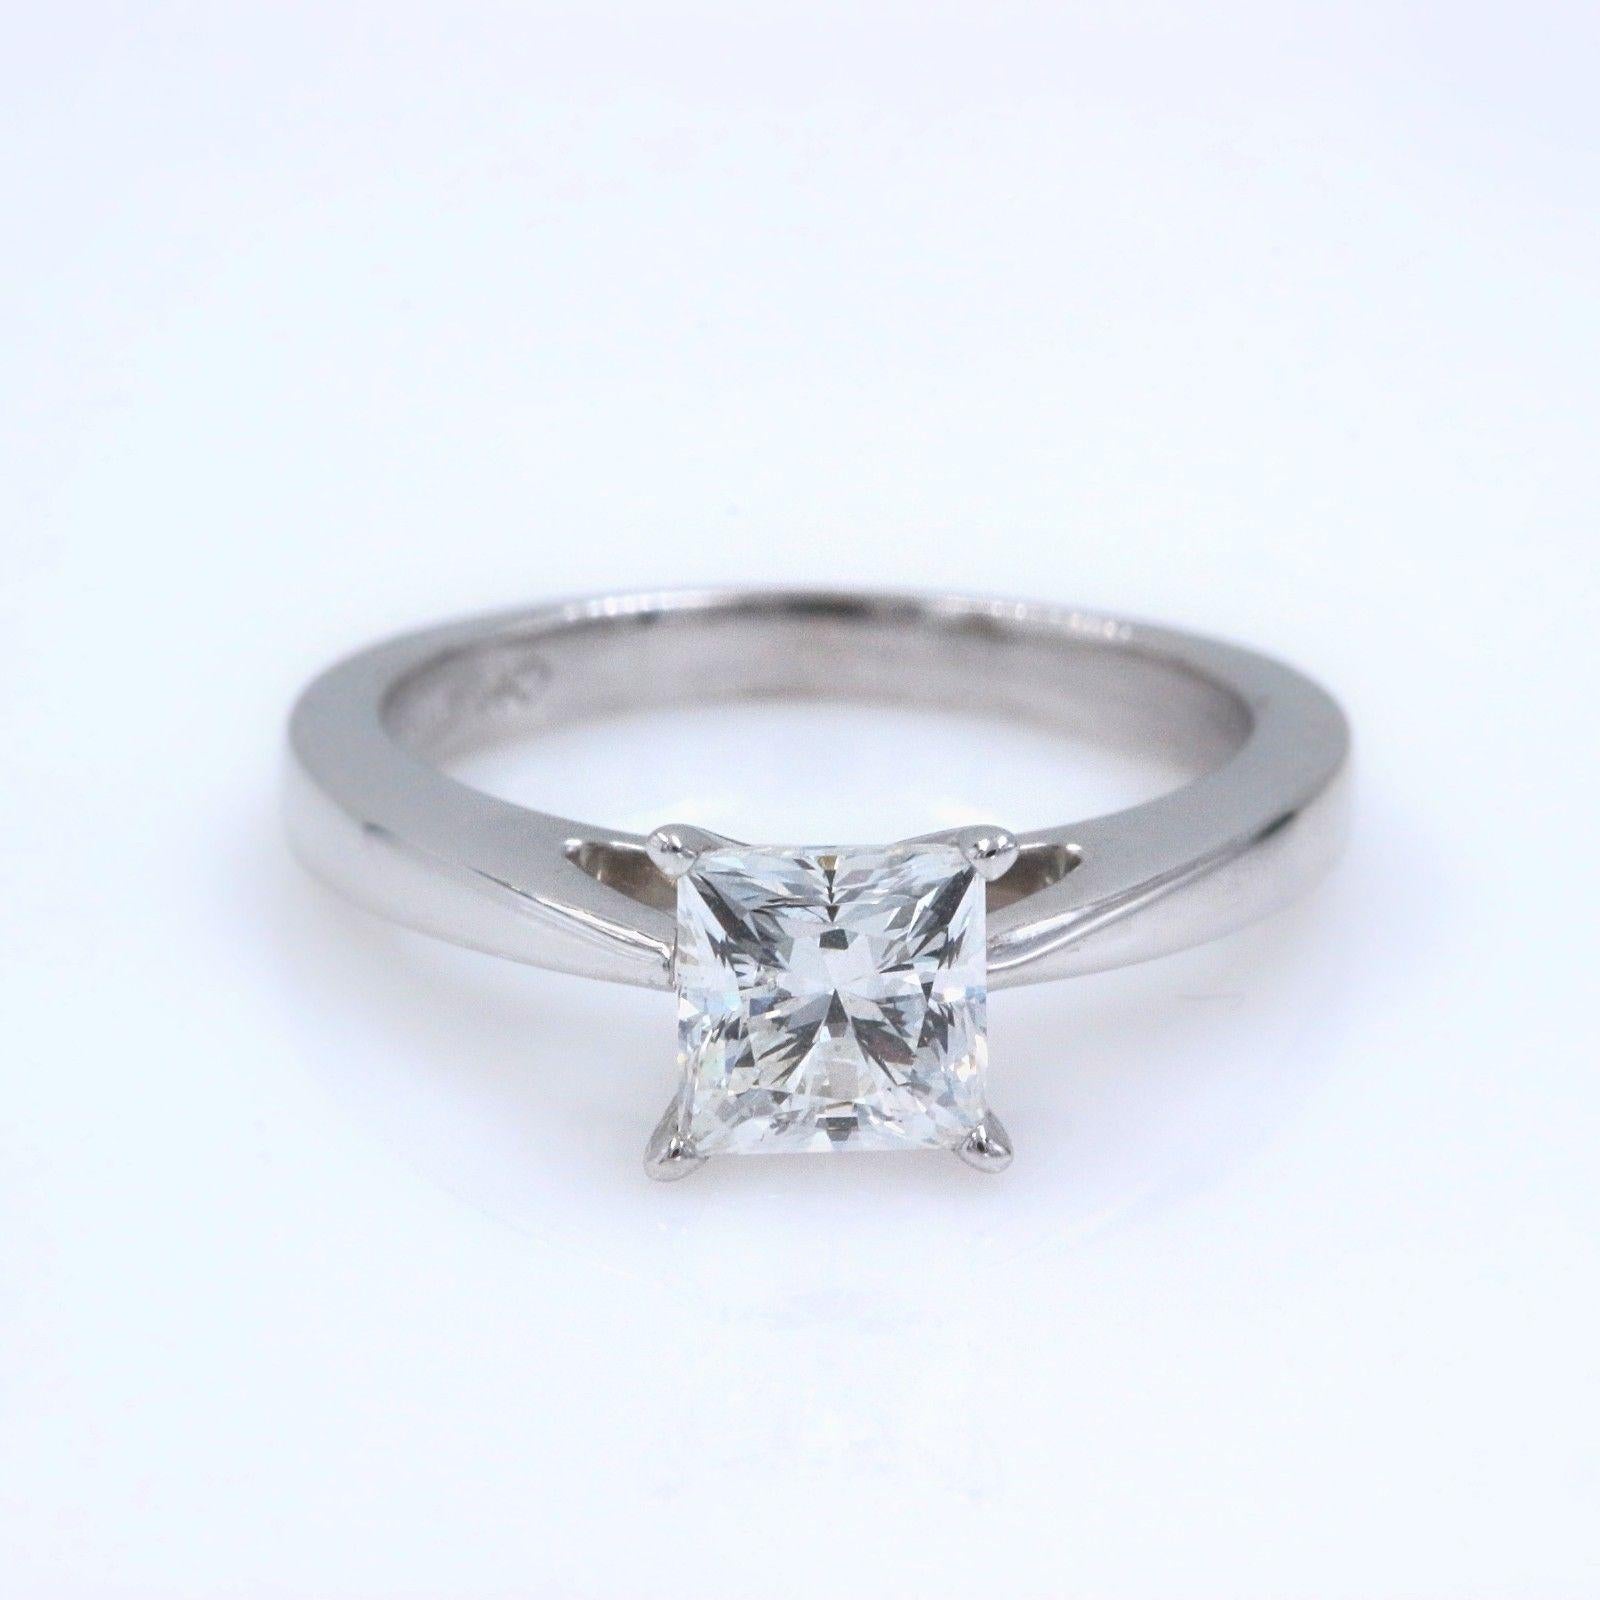 1.09 carat diamond ring